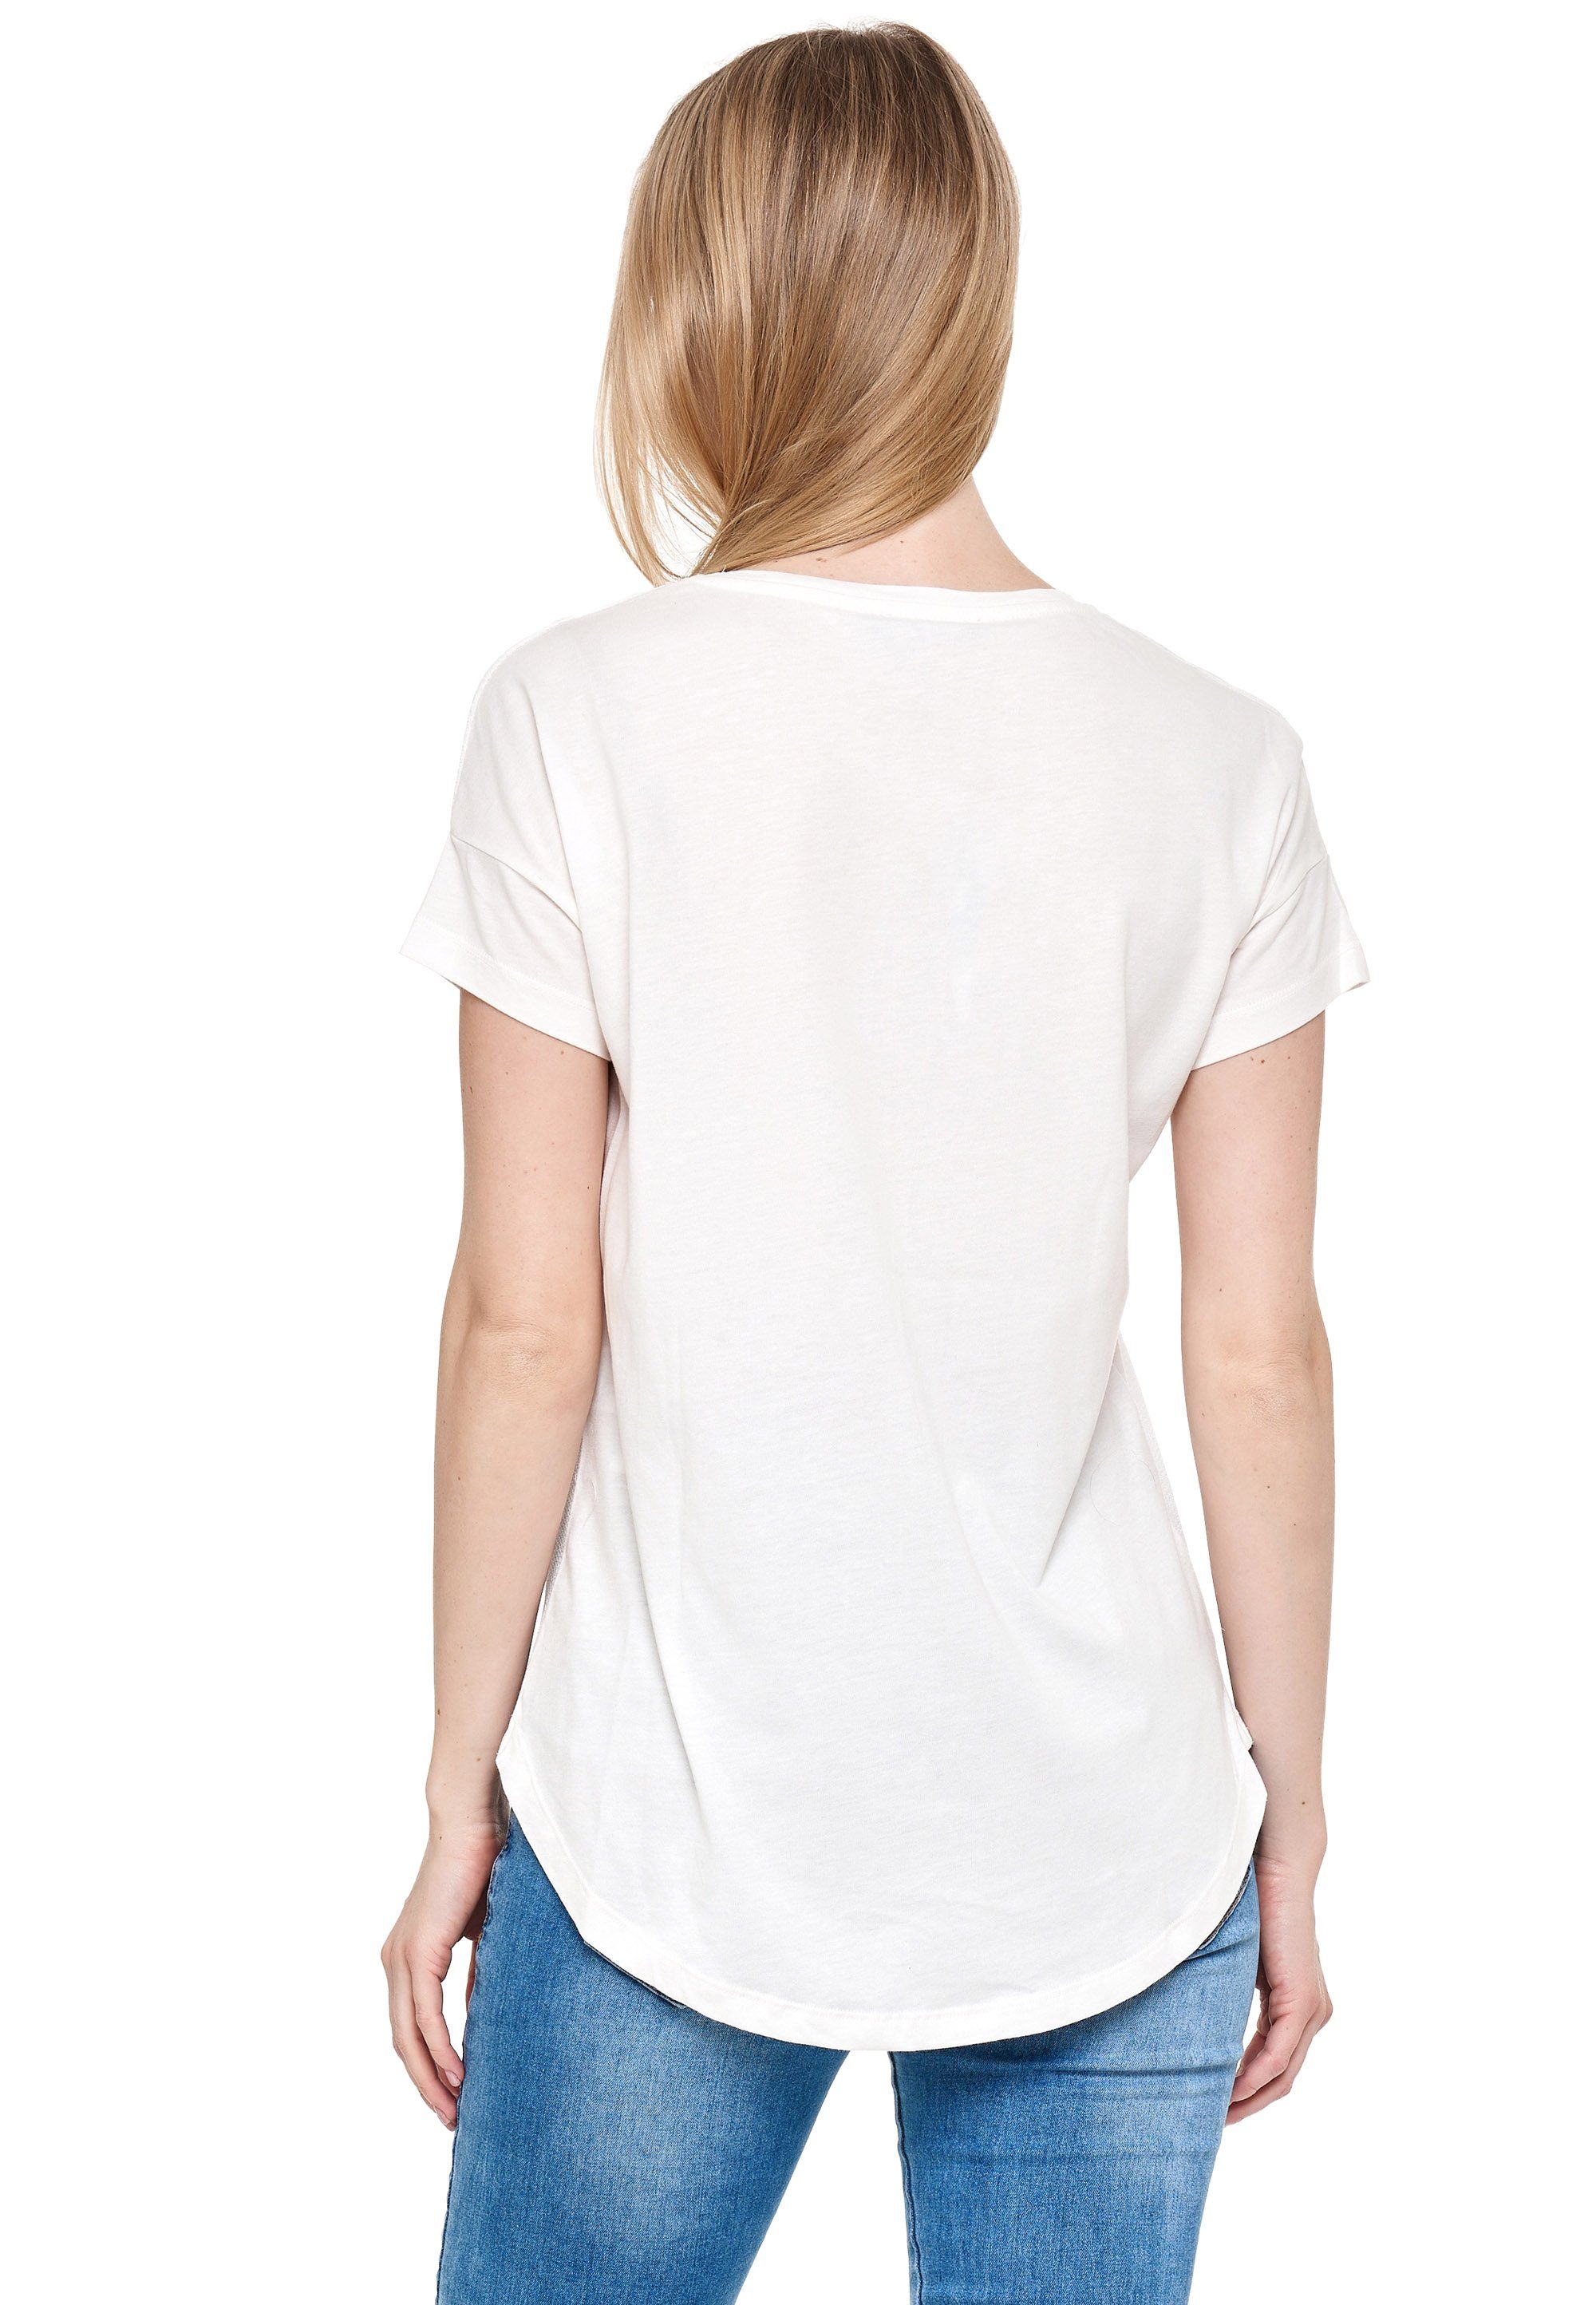 Decay T-Shirt mit weiß stilbewusstem Frontprint